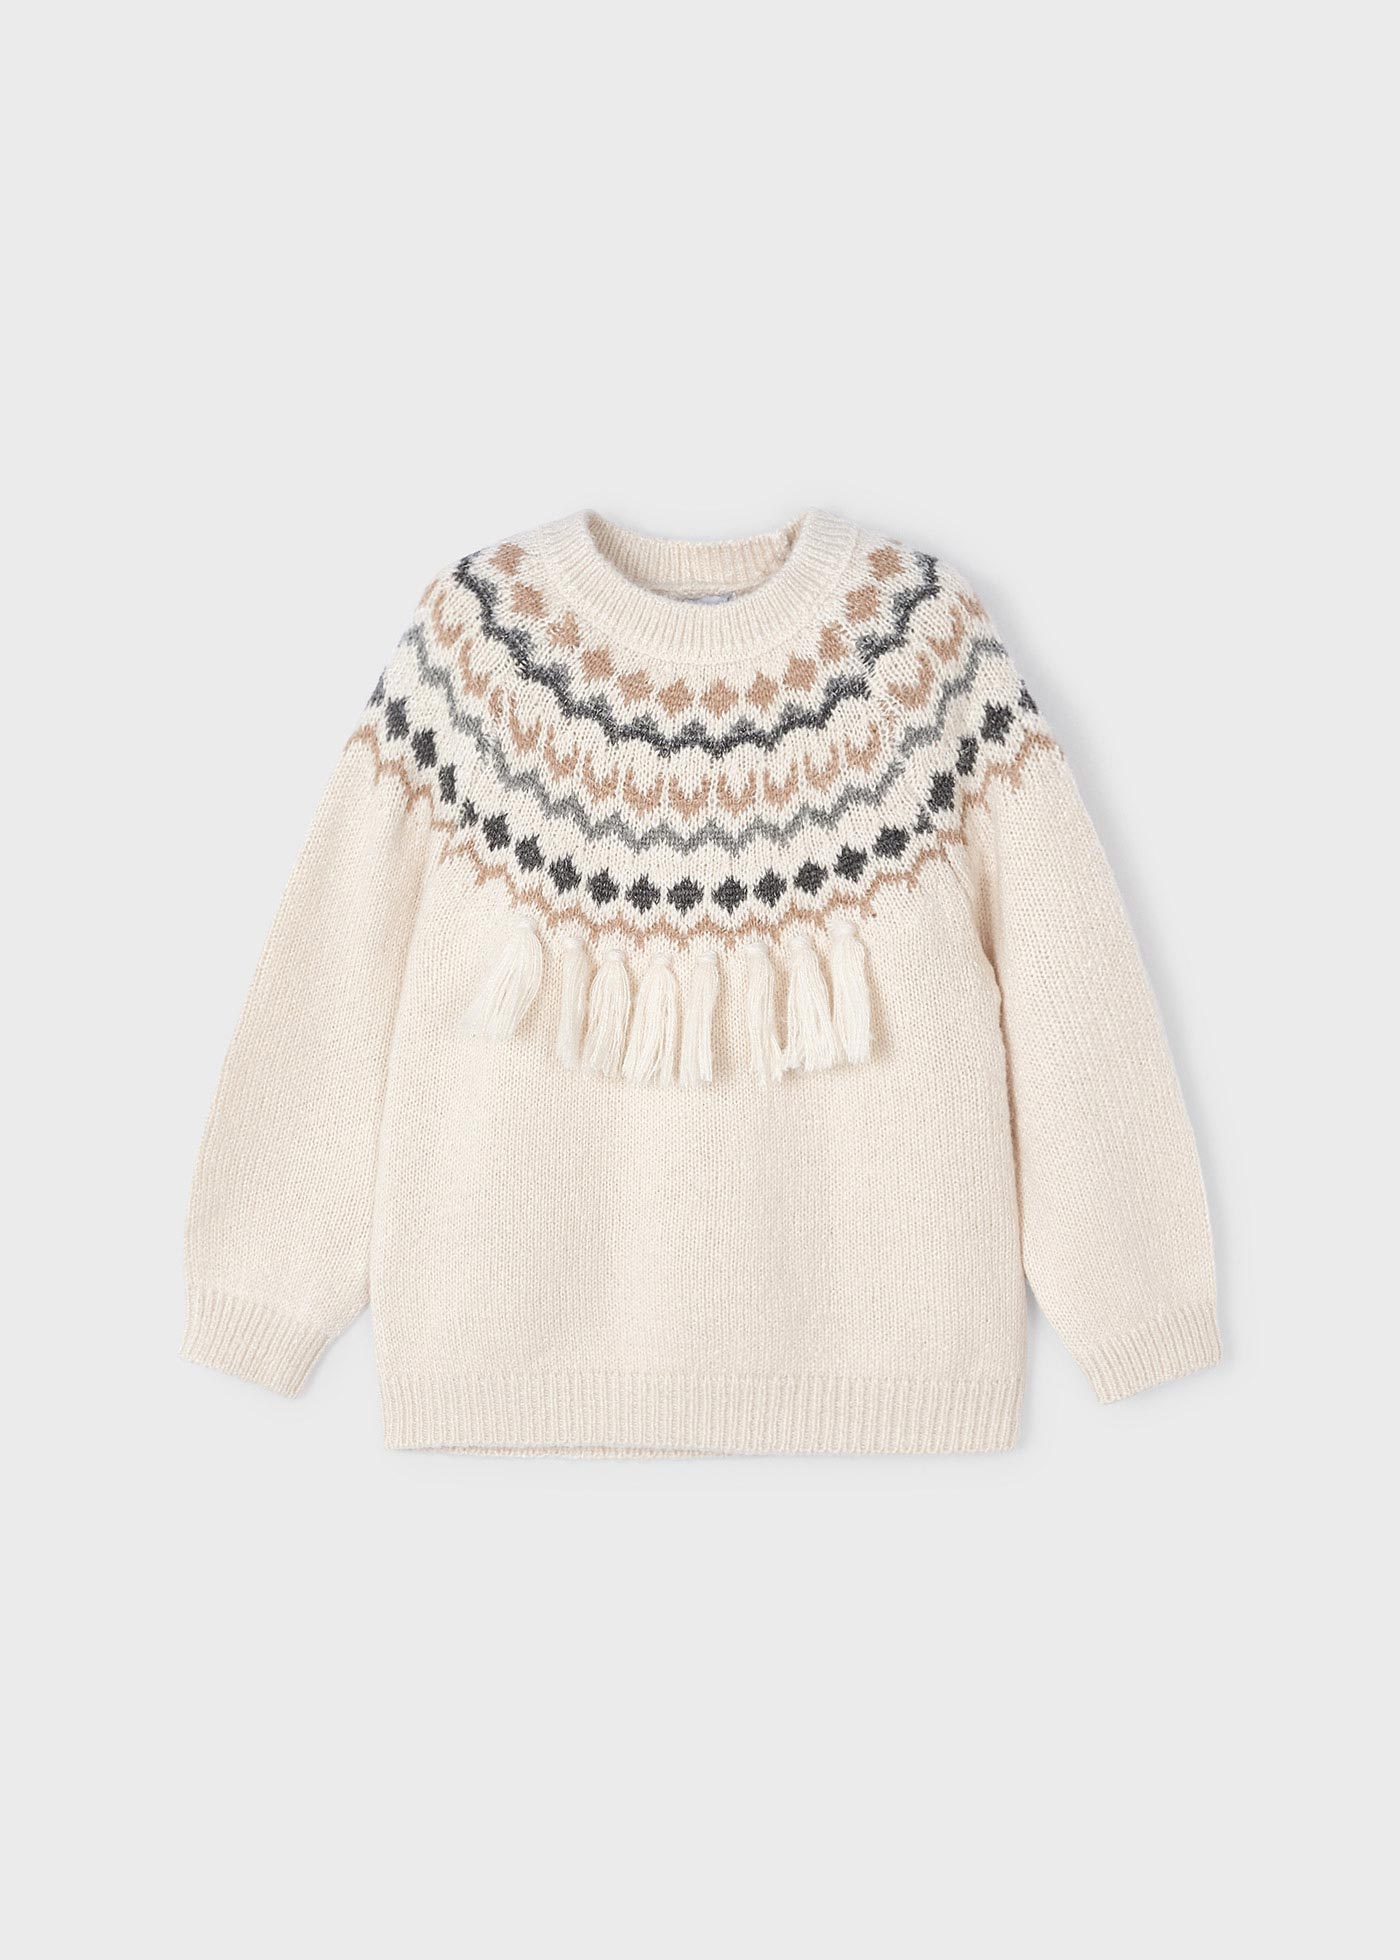 Jacquard knit sweater fringe detail girl